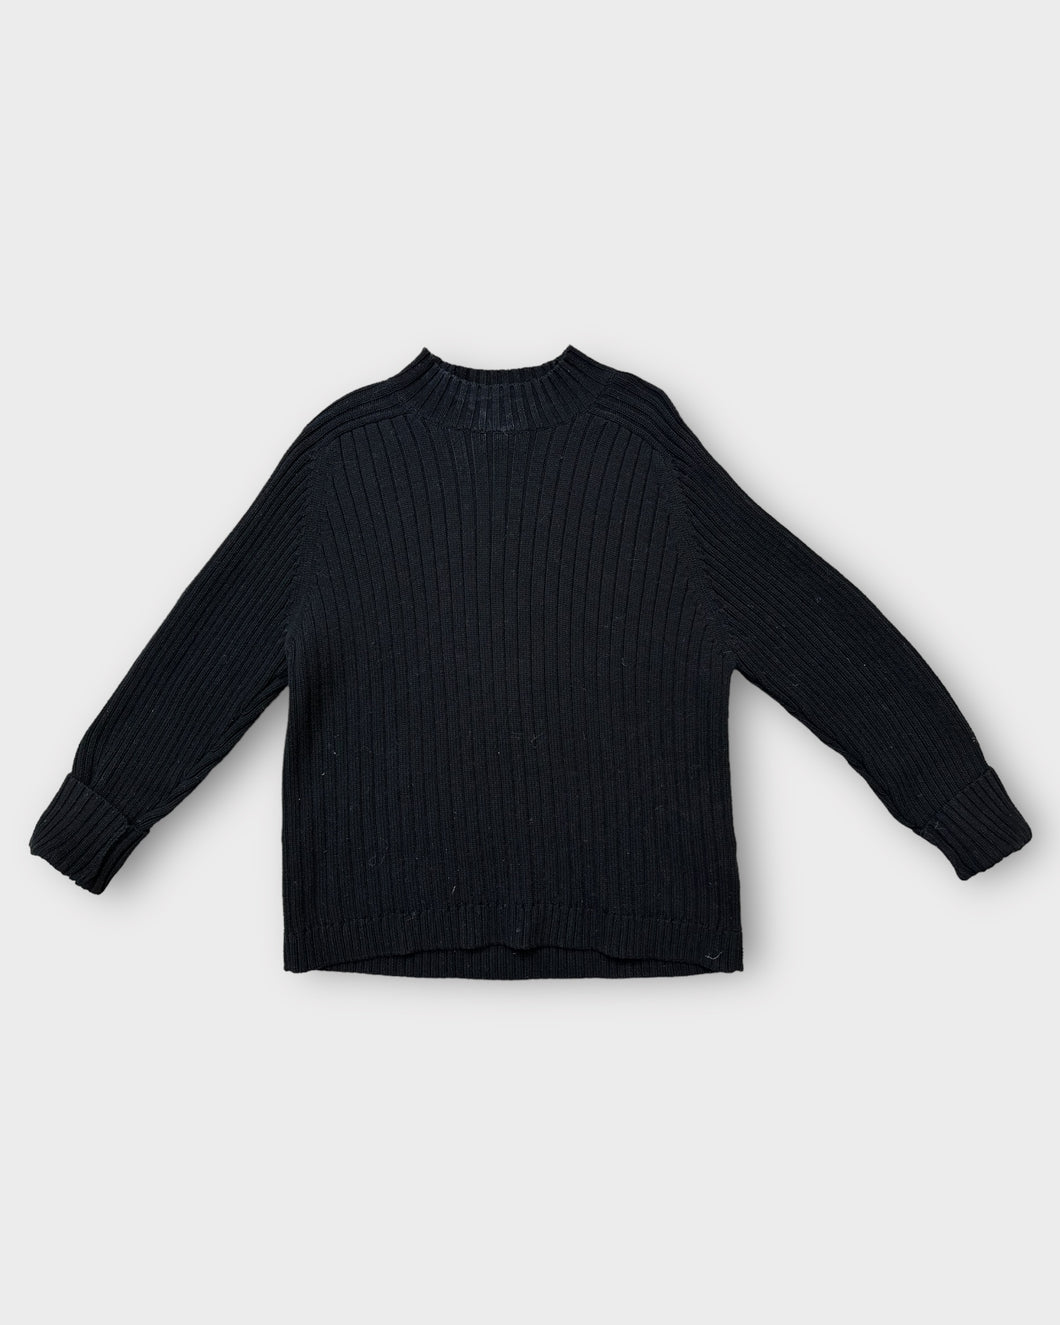 Eddie Bauer Black Rib Mock Neck Sweater (XL)